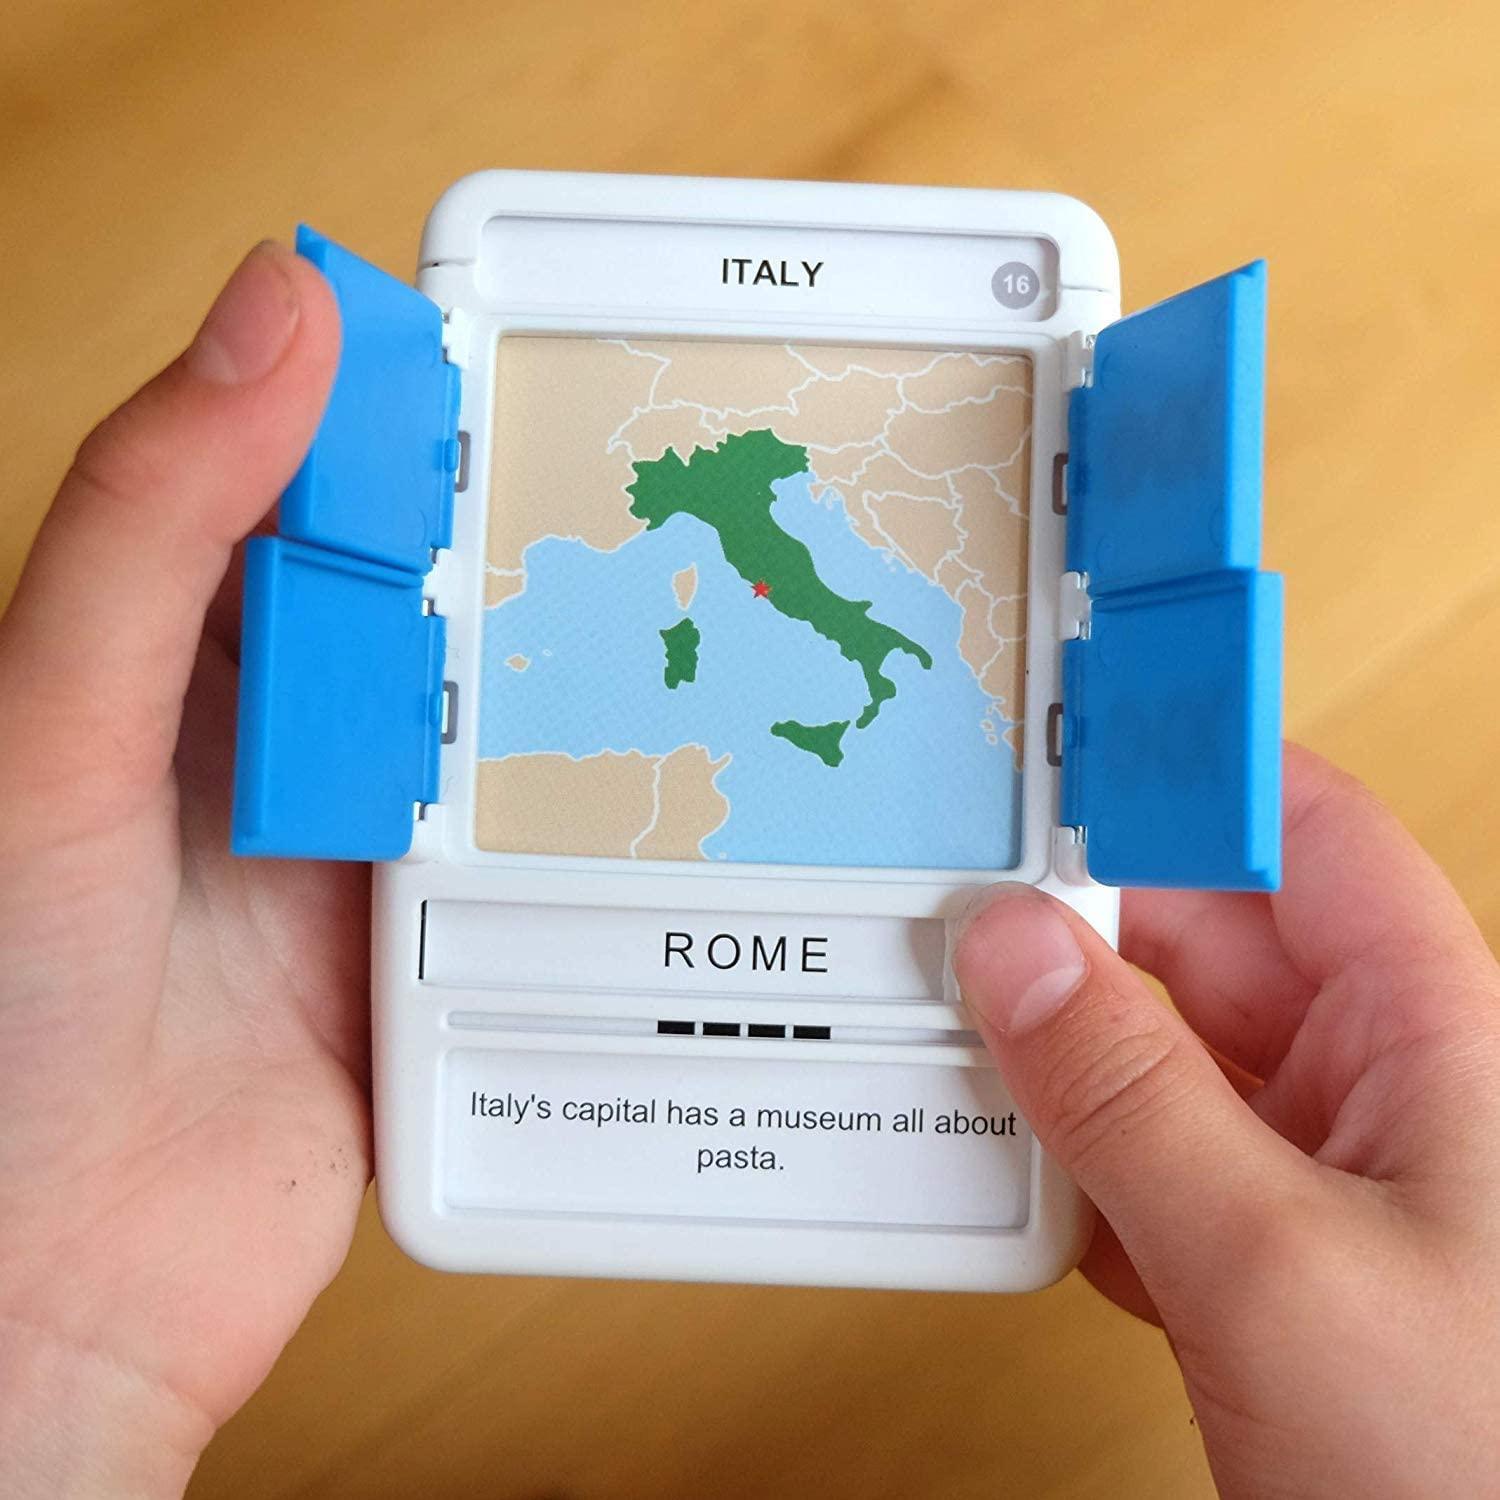 100 PICS - Italy - The Card Vault